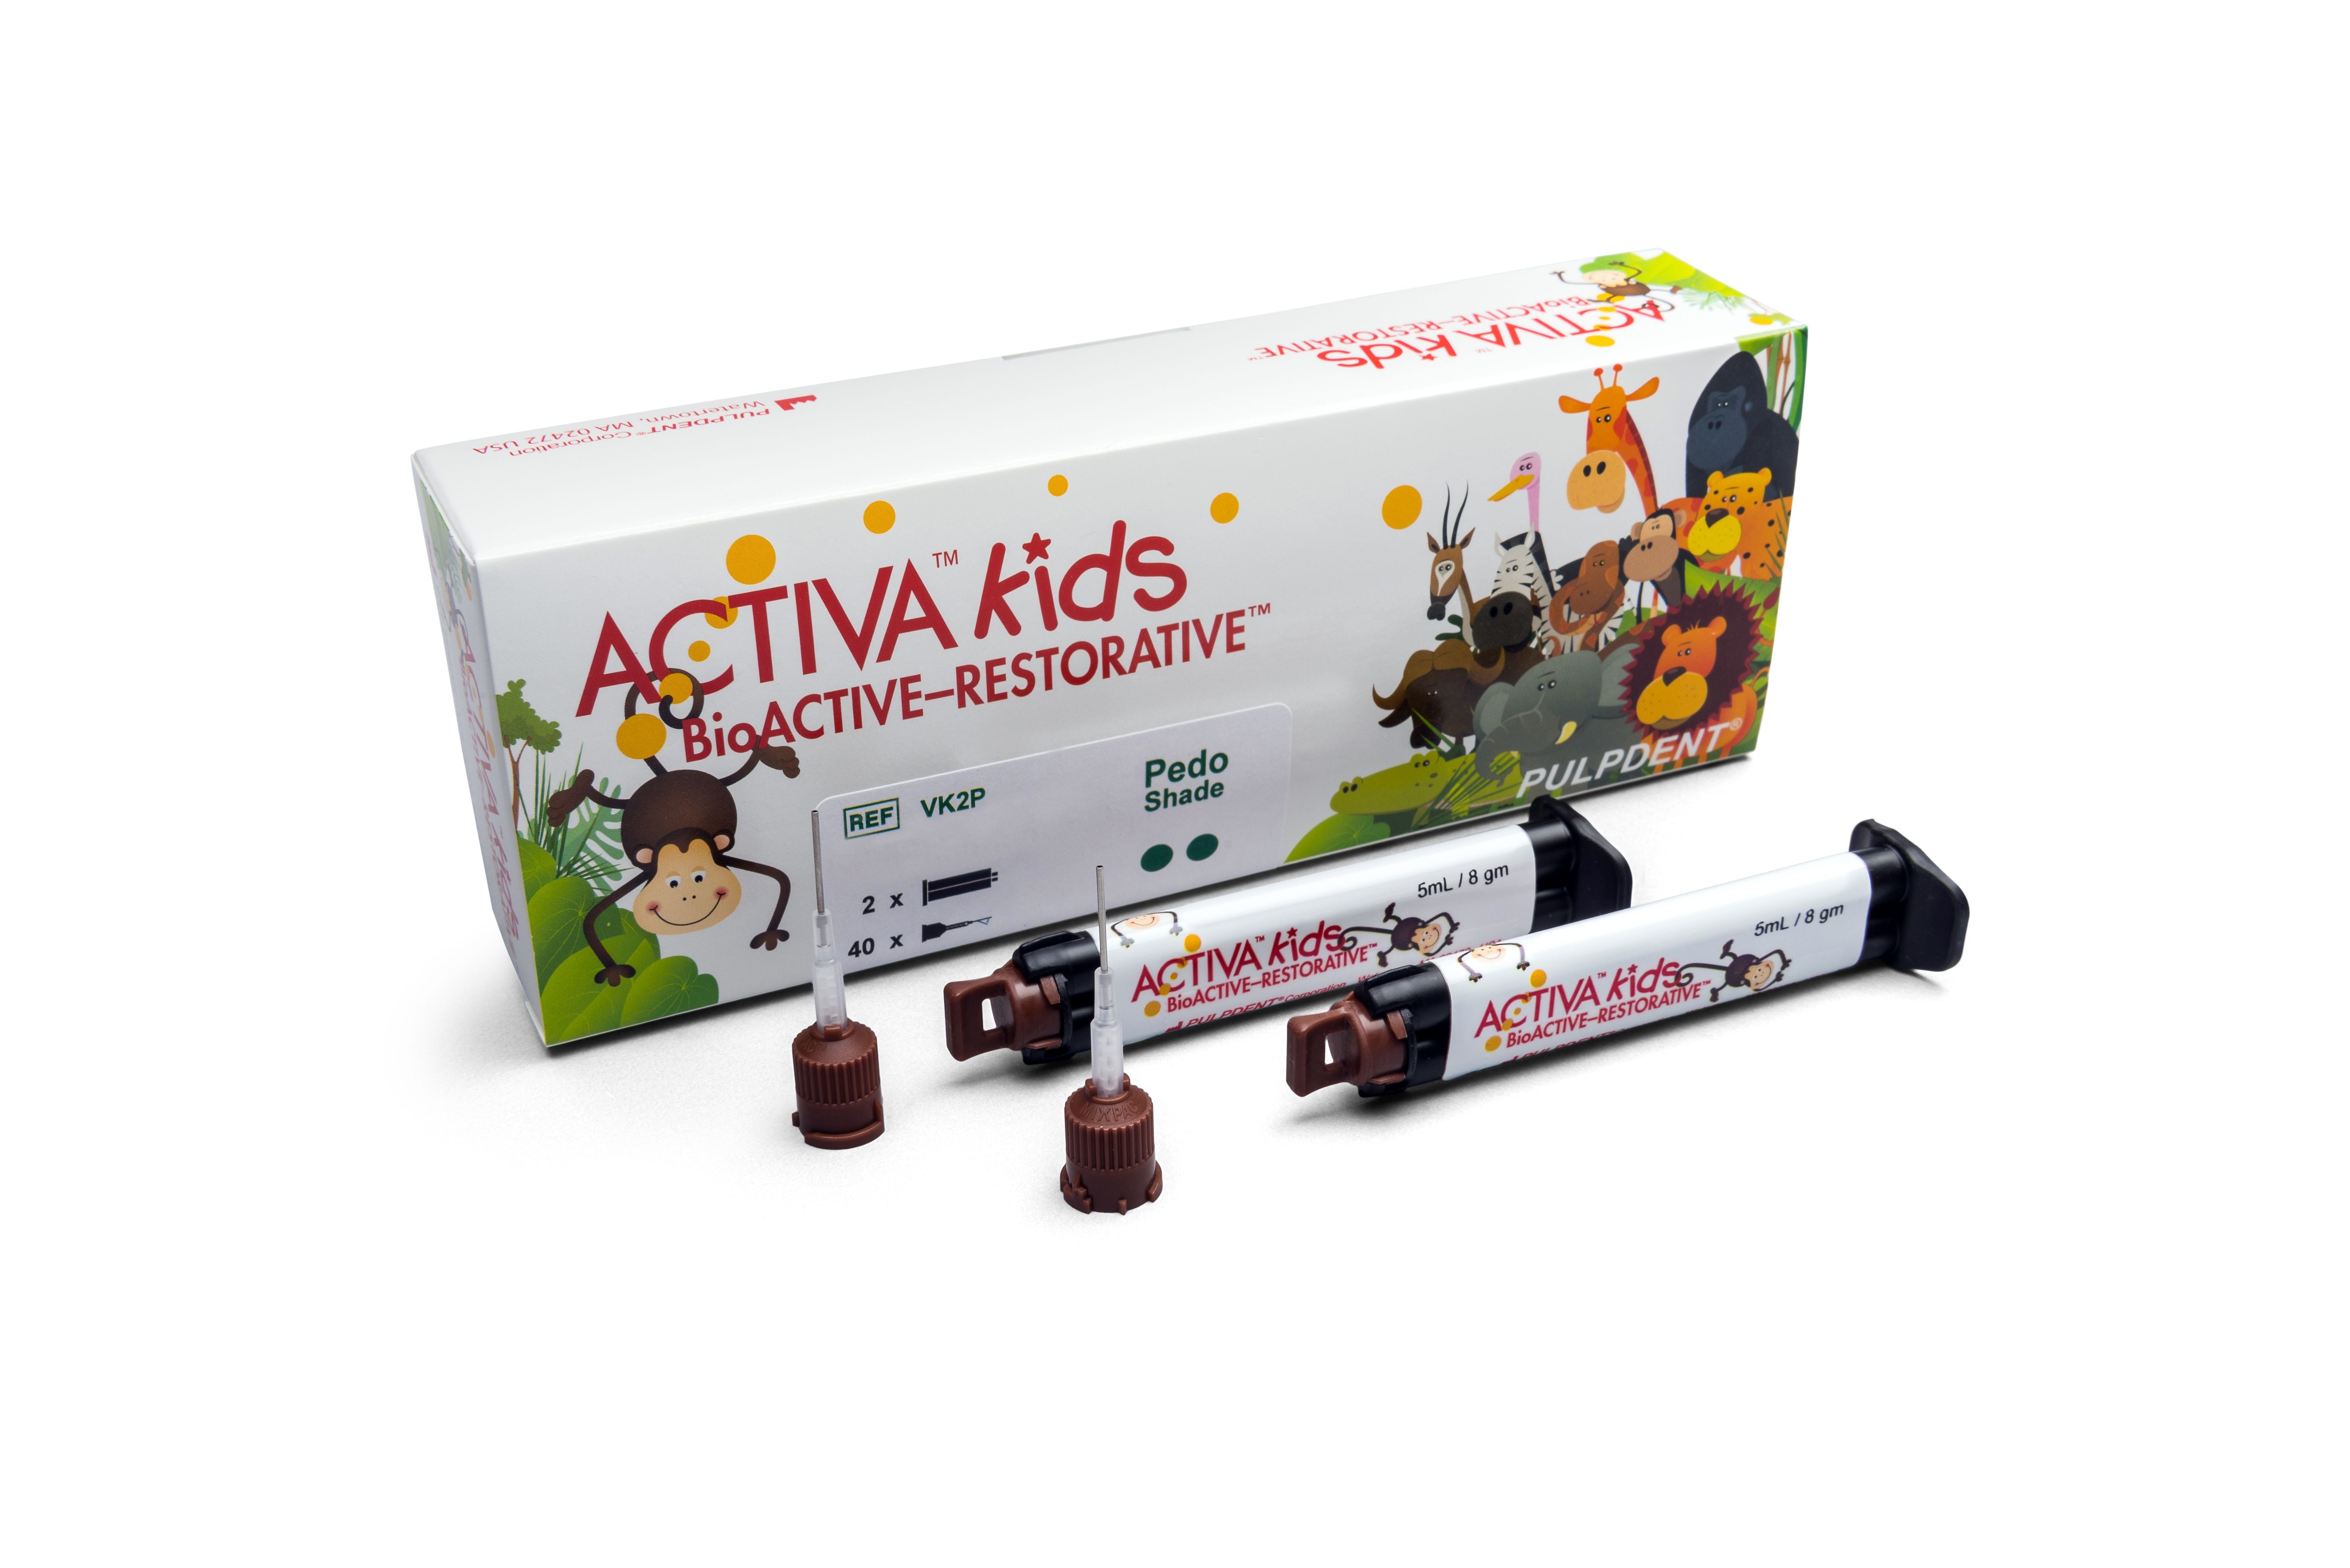 ACTIVA kids BioACTIVE Restorative